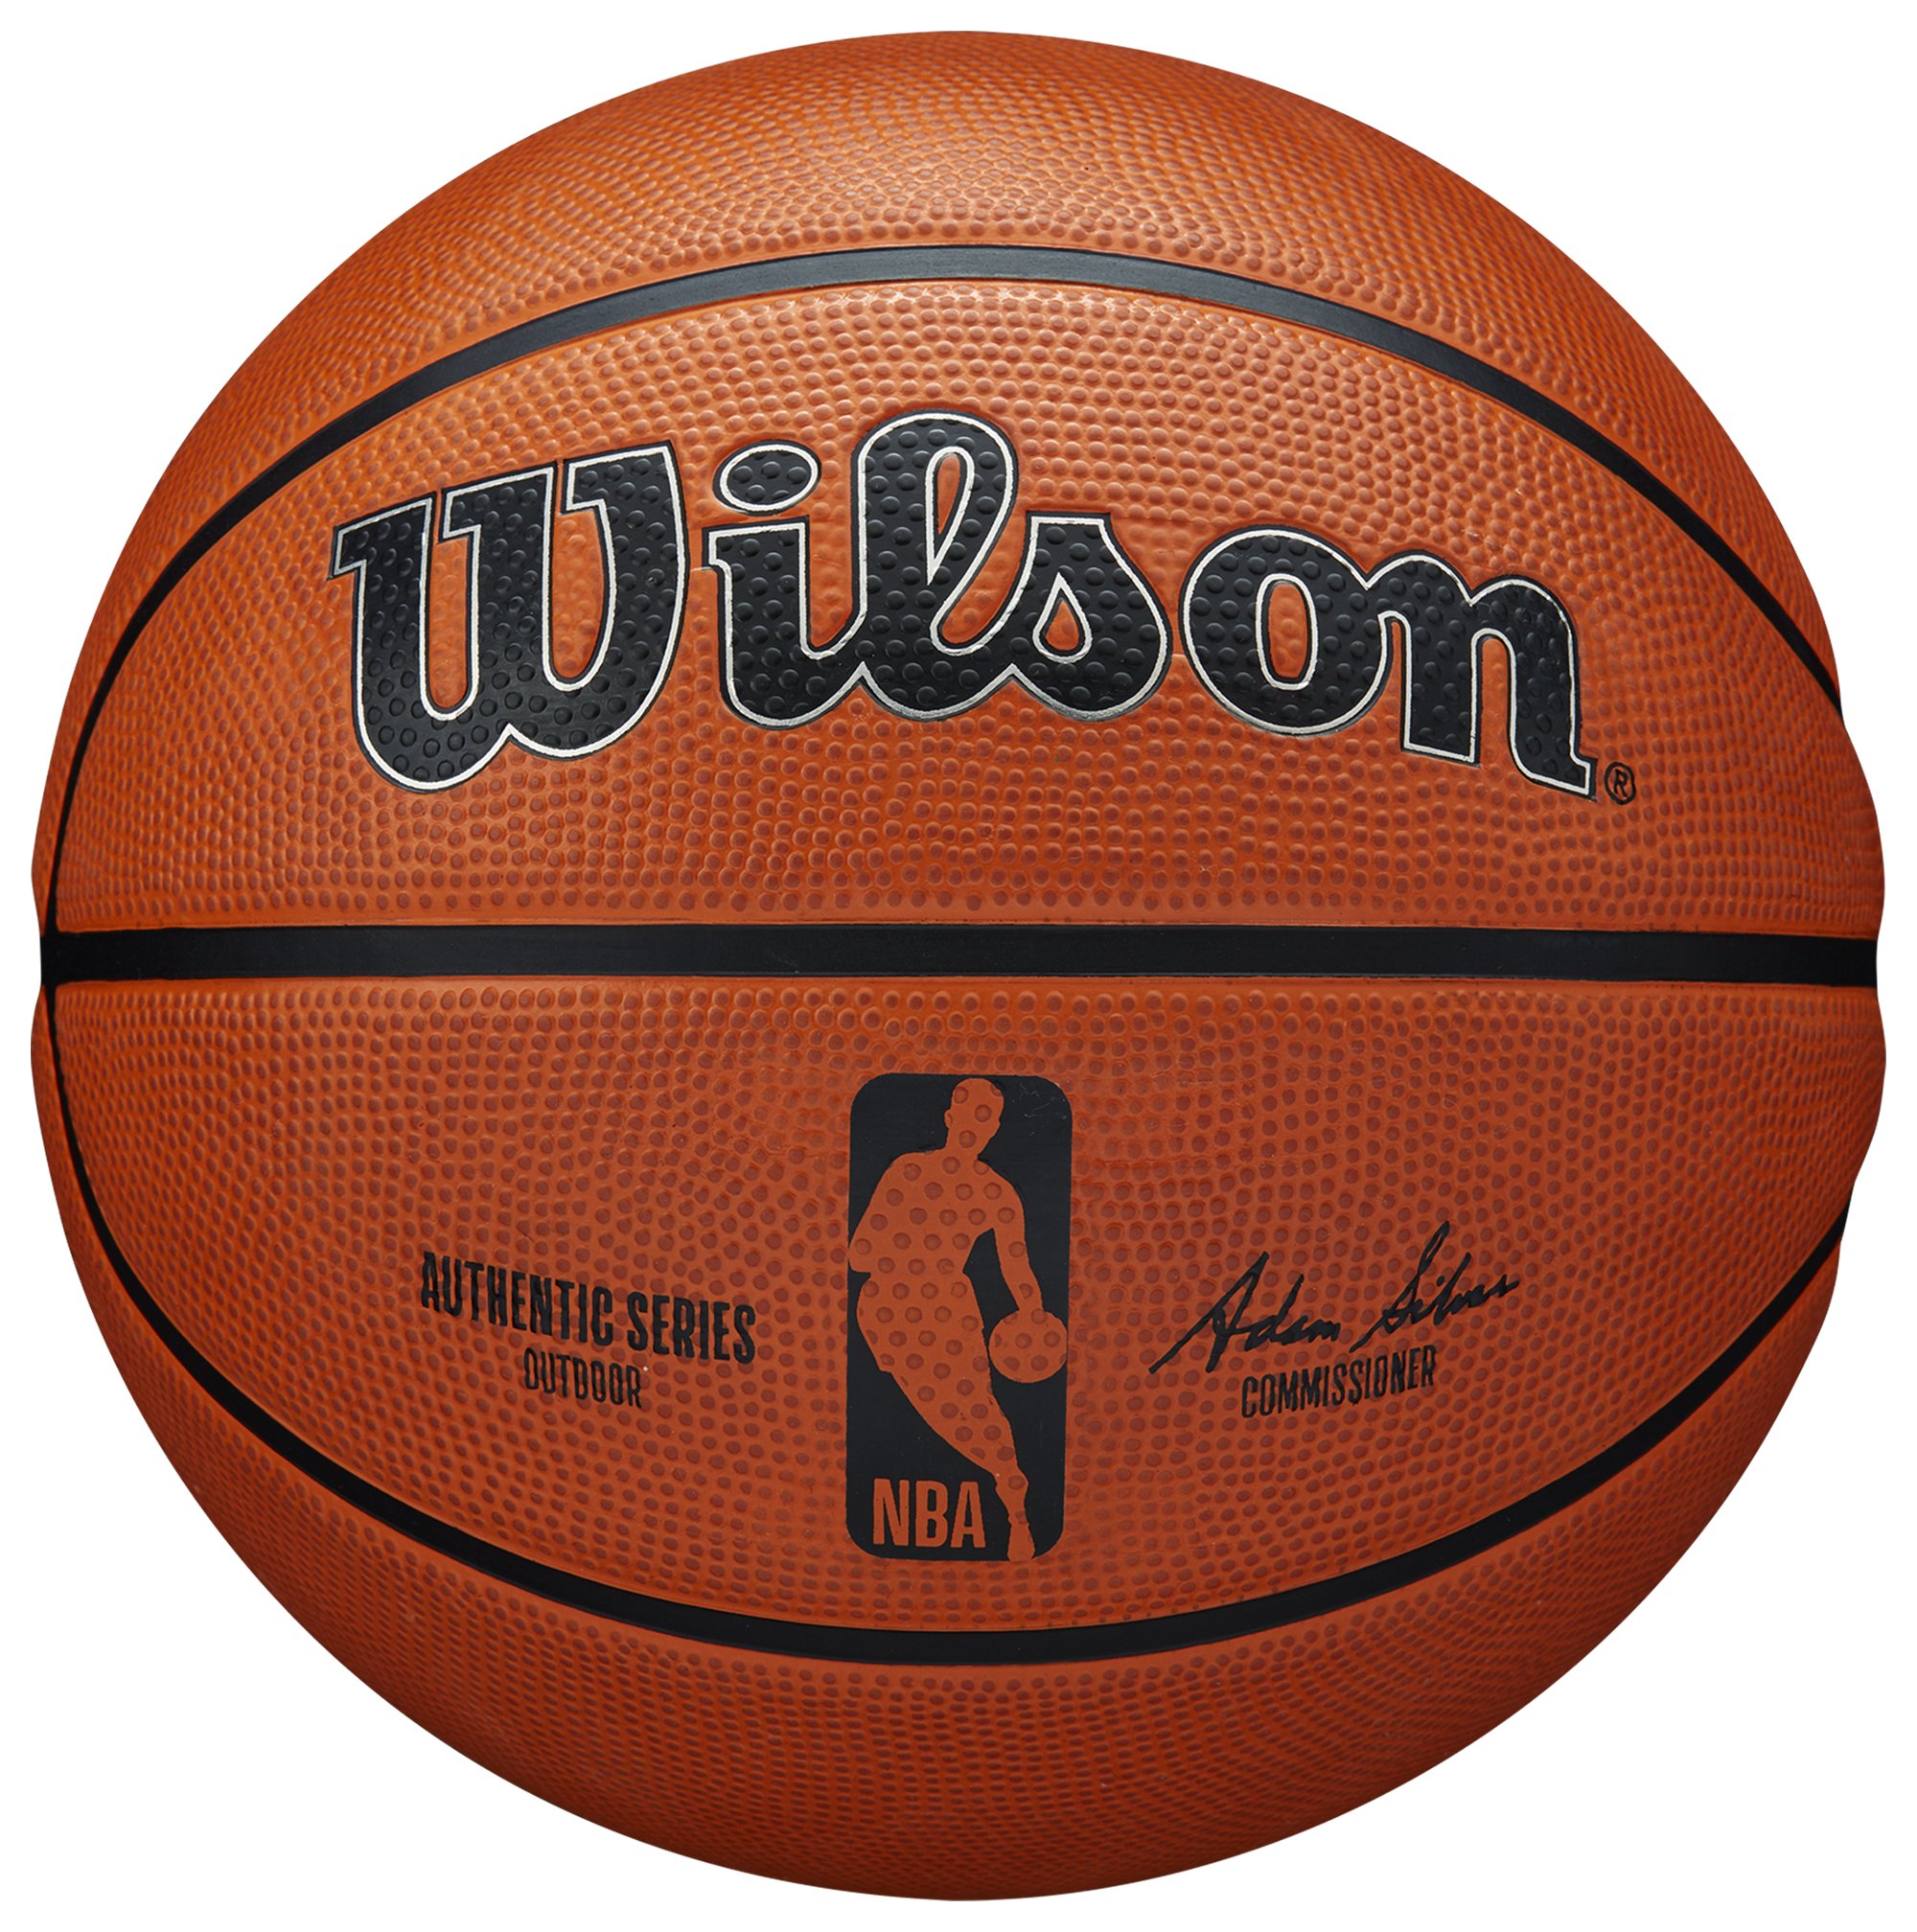 Wilson NBA Auth Outdoor Basketball